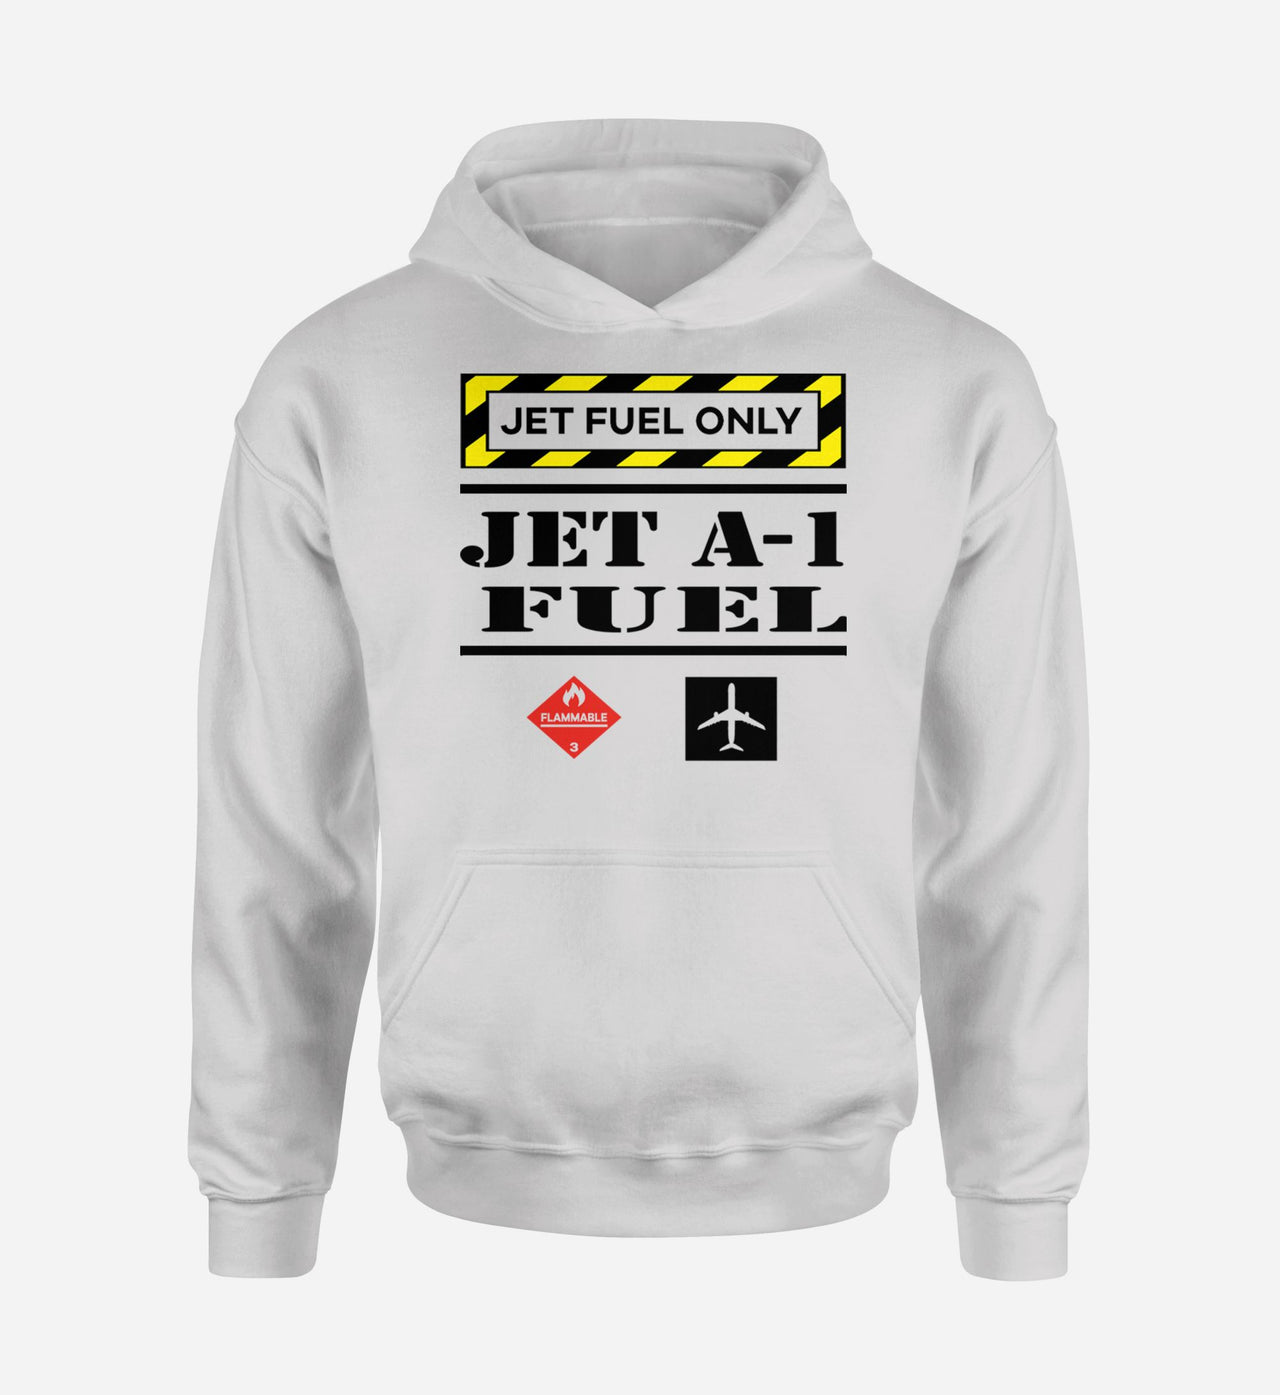 Jet Fuel Only Designed Hoodies